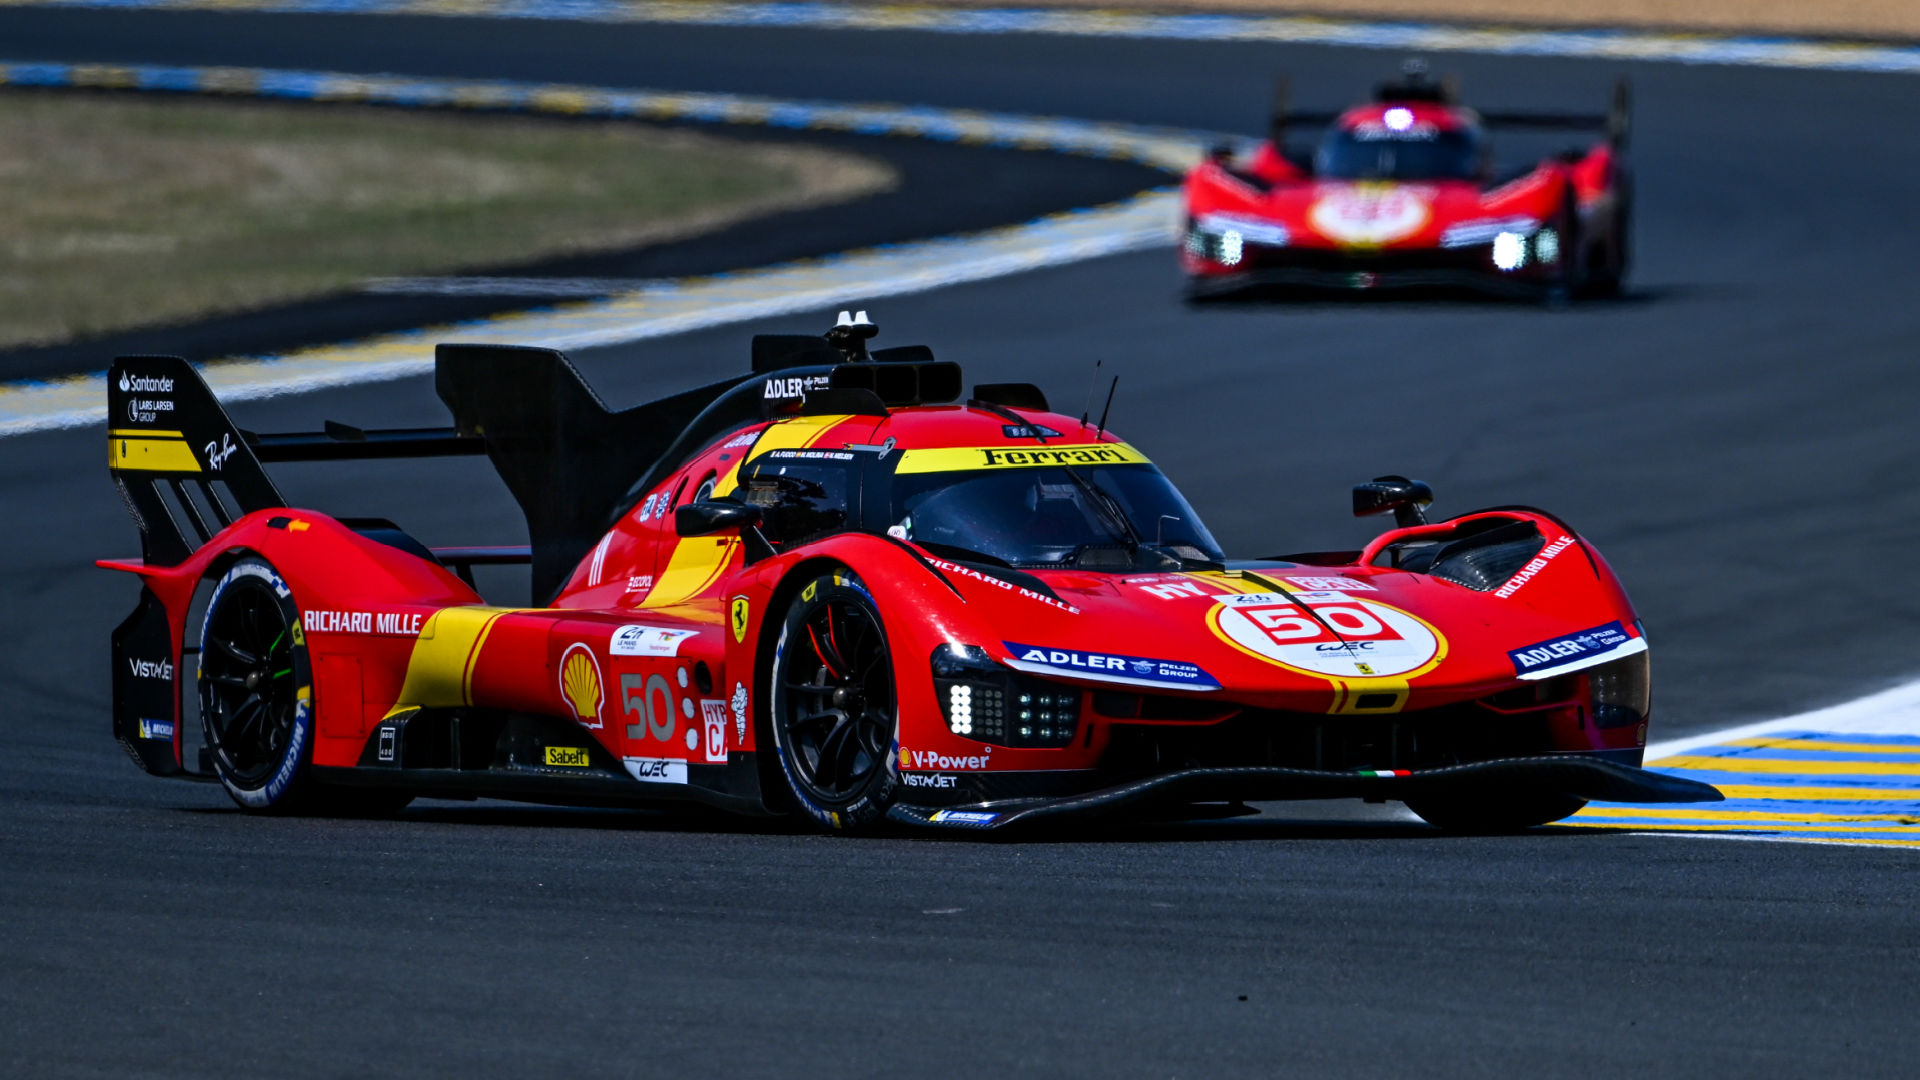 Ferrari's glorious return to Le Mans 24 Hours